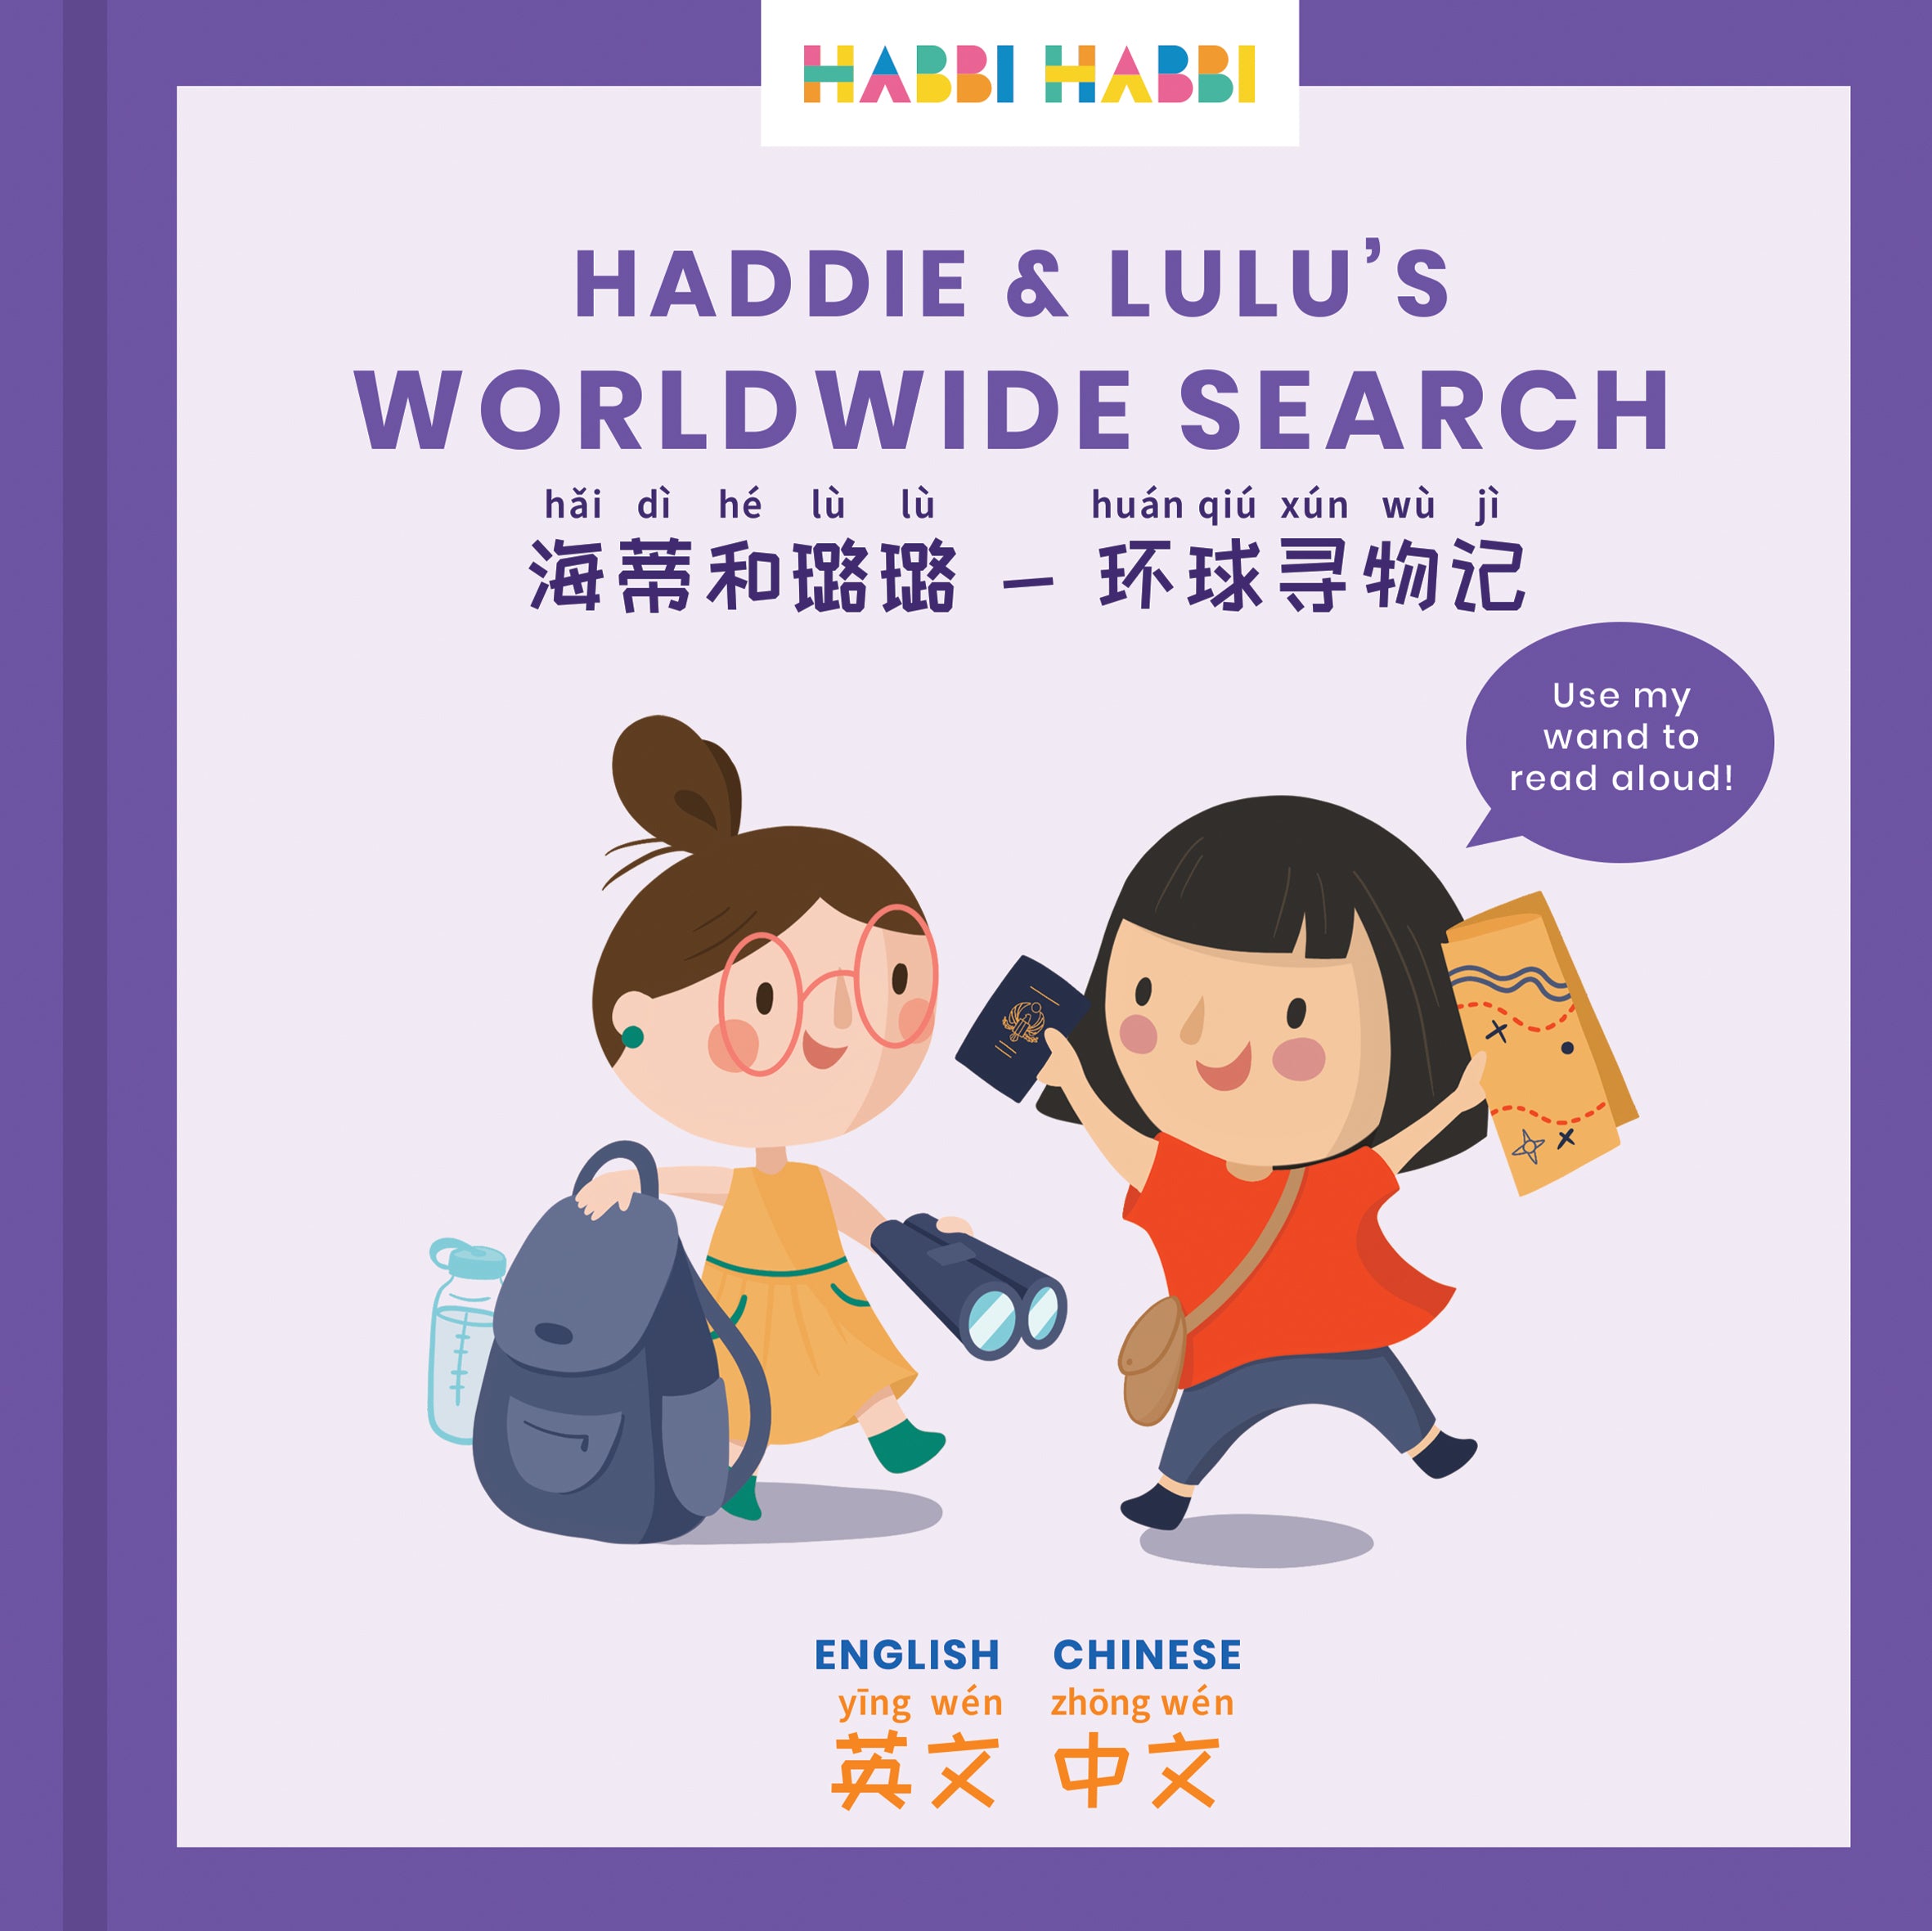 Stories For Kids In Chinese Spanish Haddie Lulu S Worldwide Search Habbi Habbi